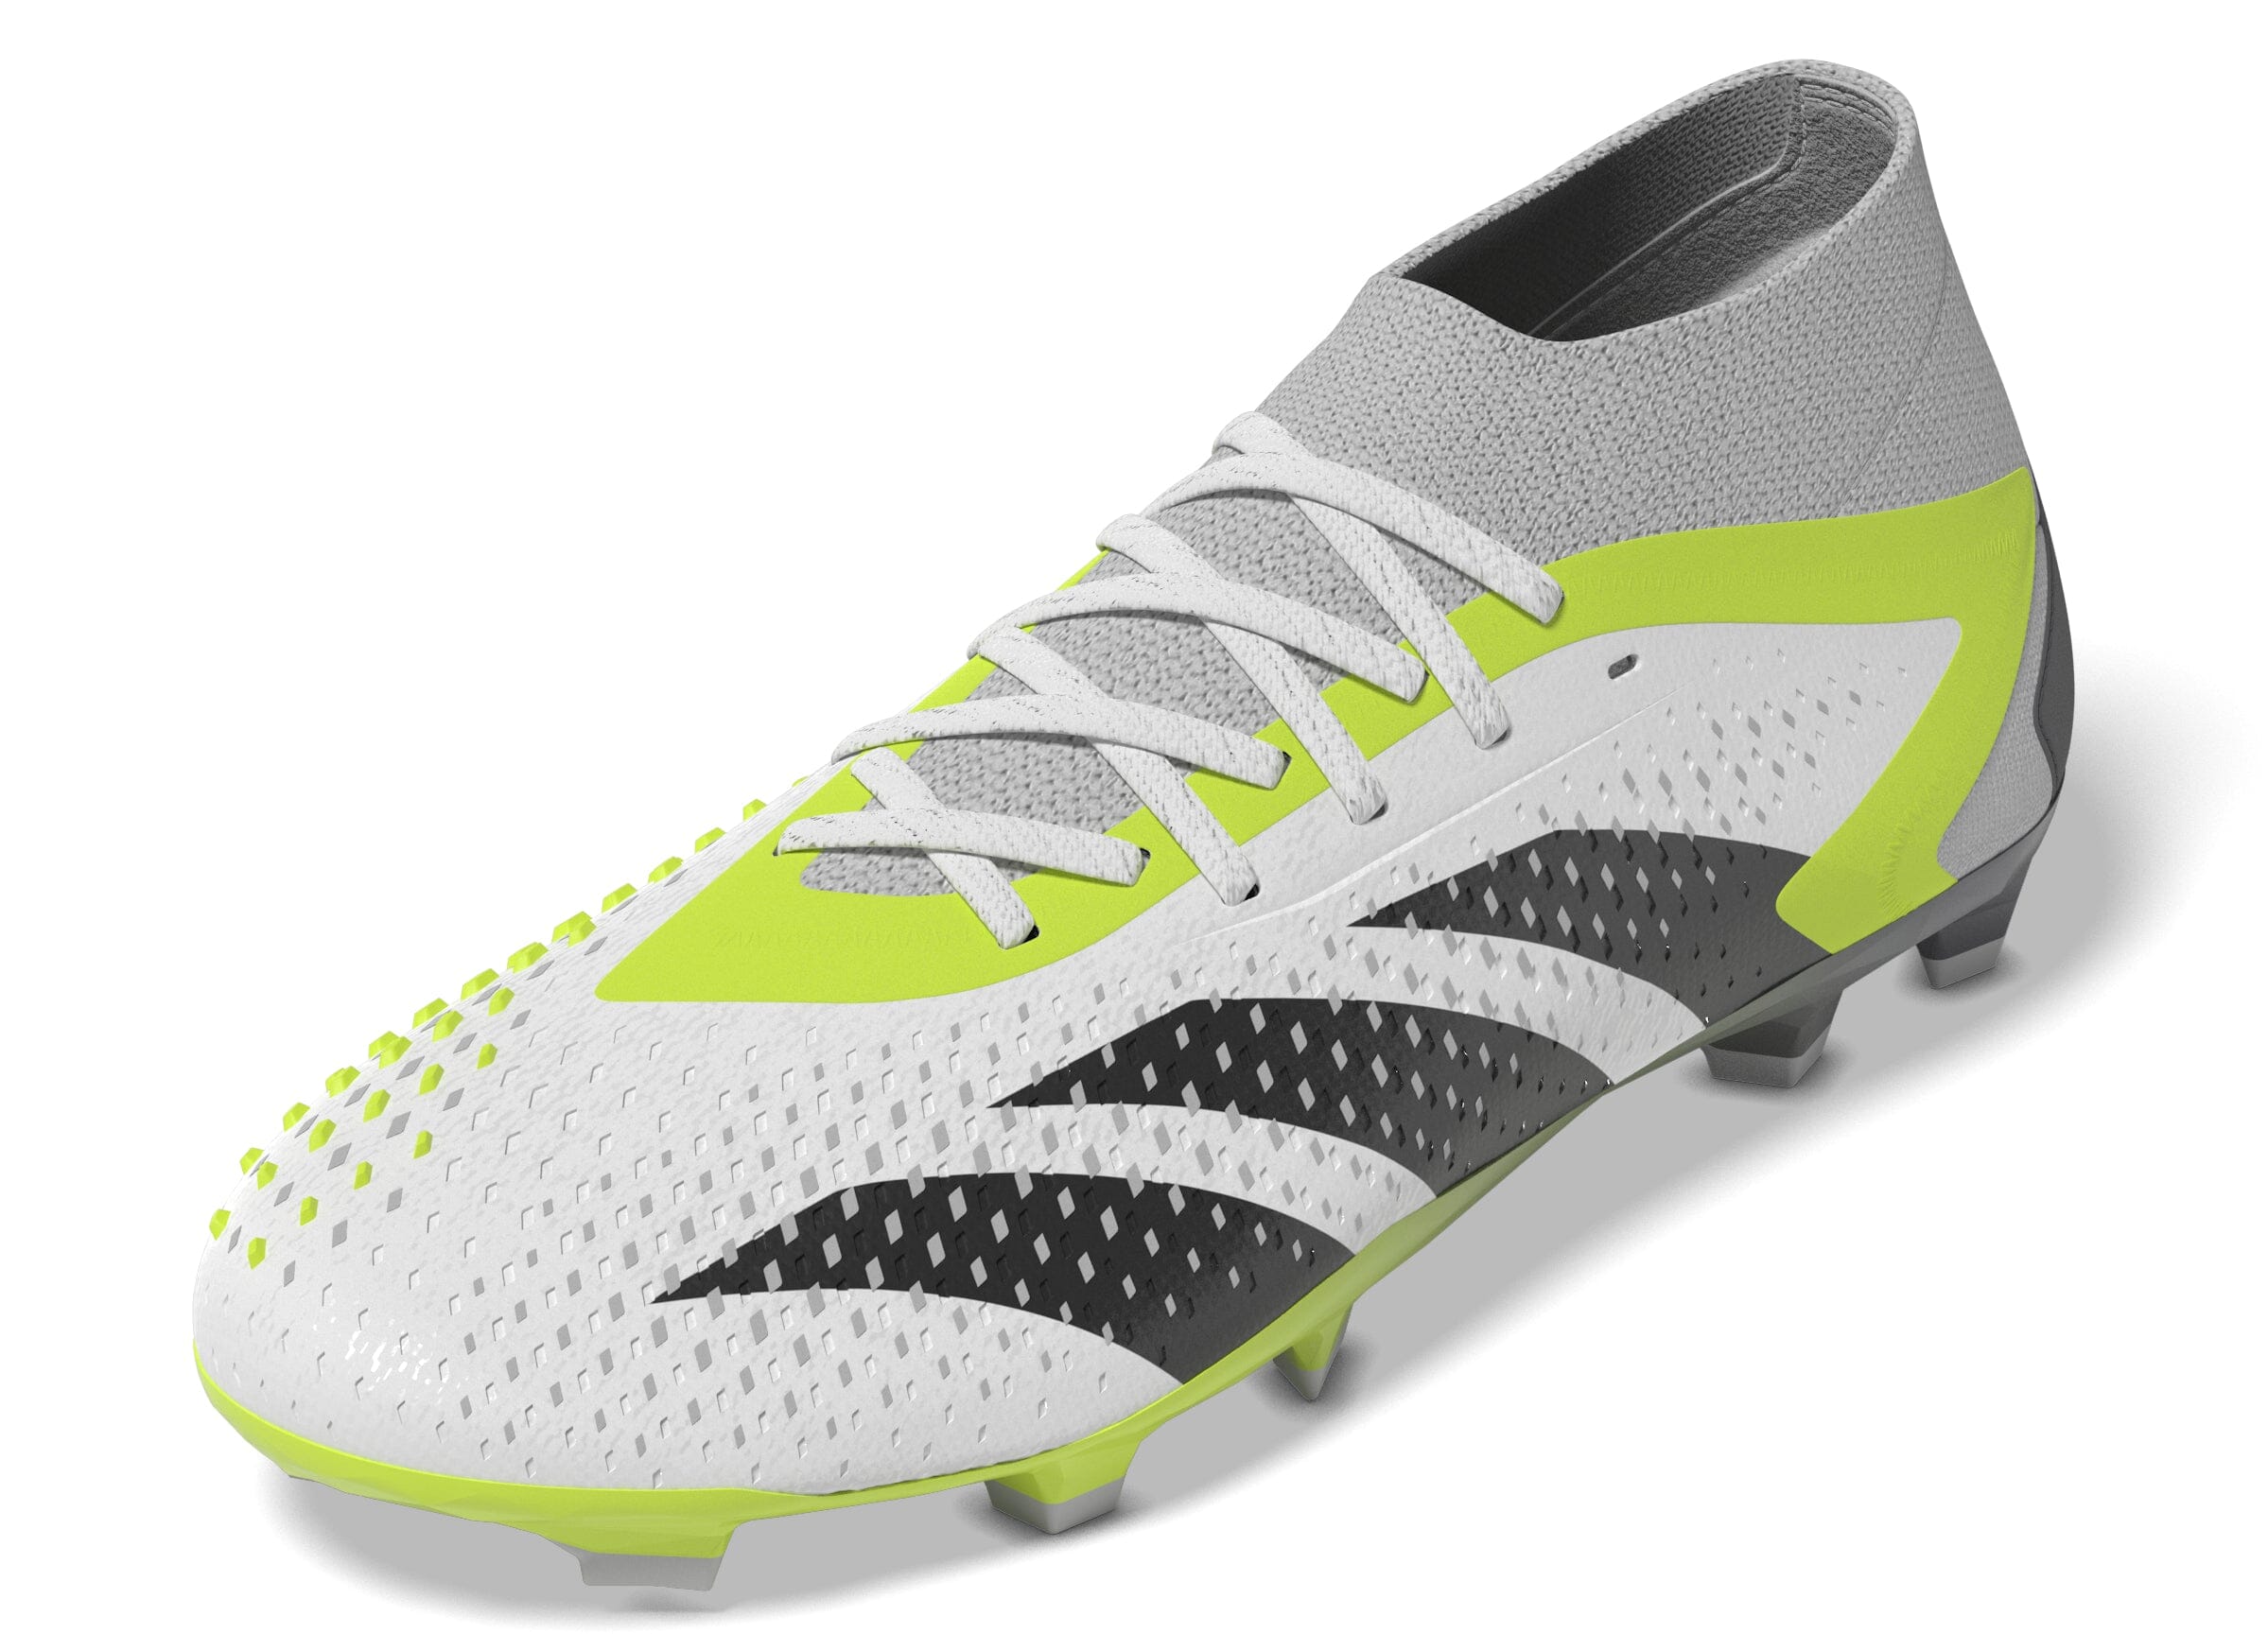 Adidas / Predator Freak + AG Soccer Cleats